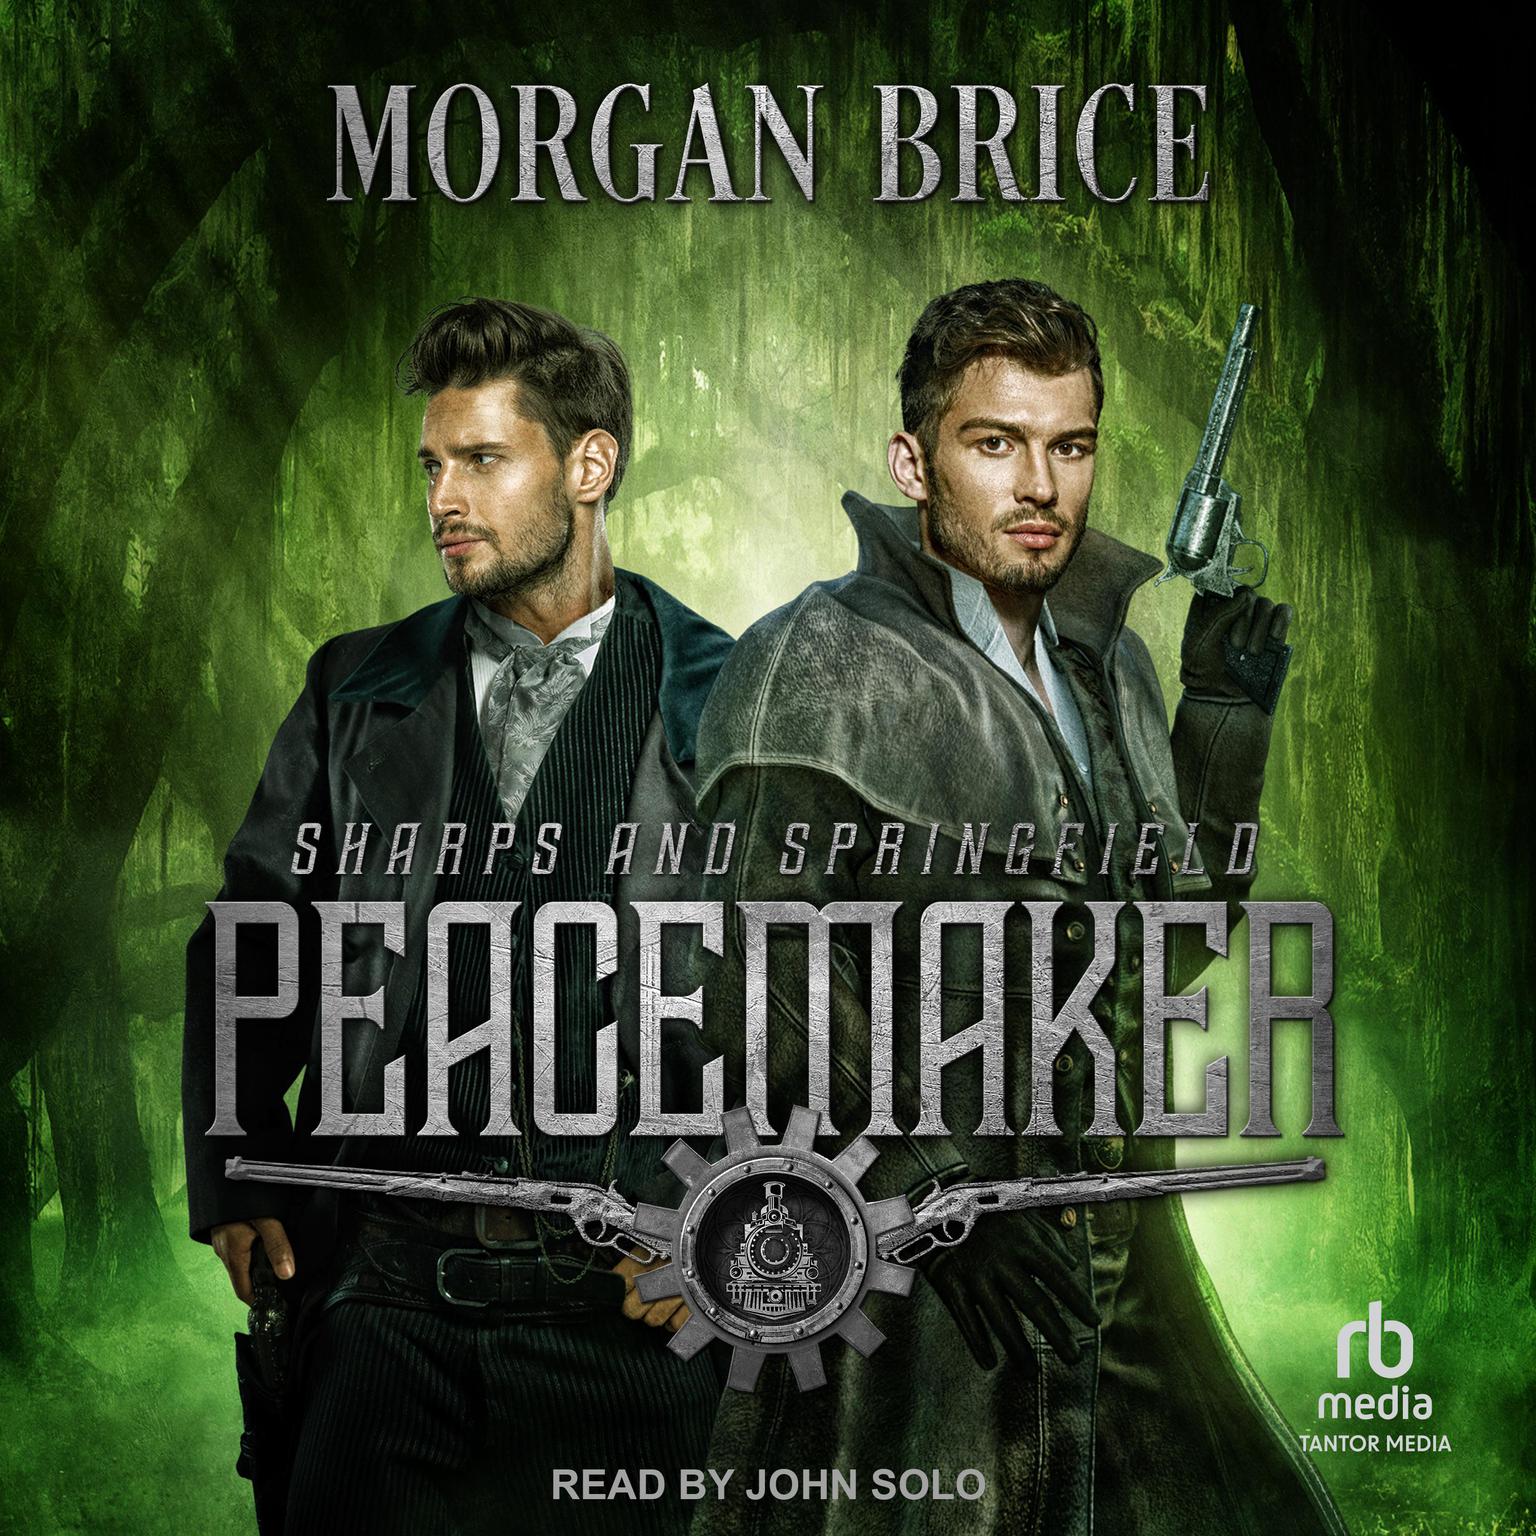 Peacemaker Audiobook, by Morgan Brice